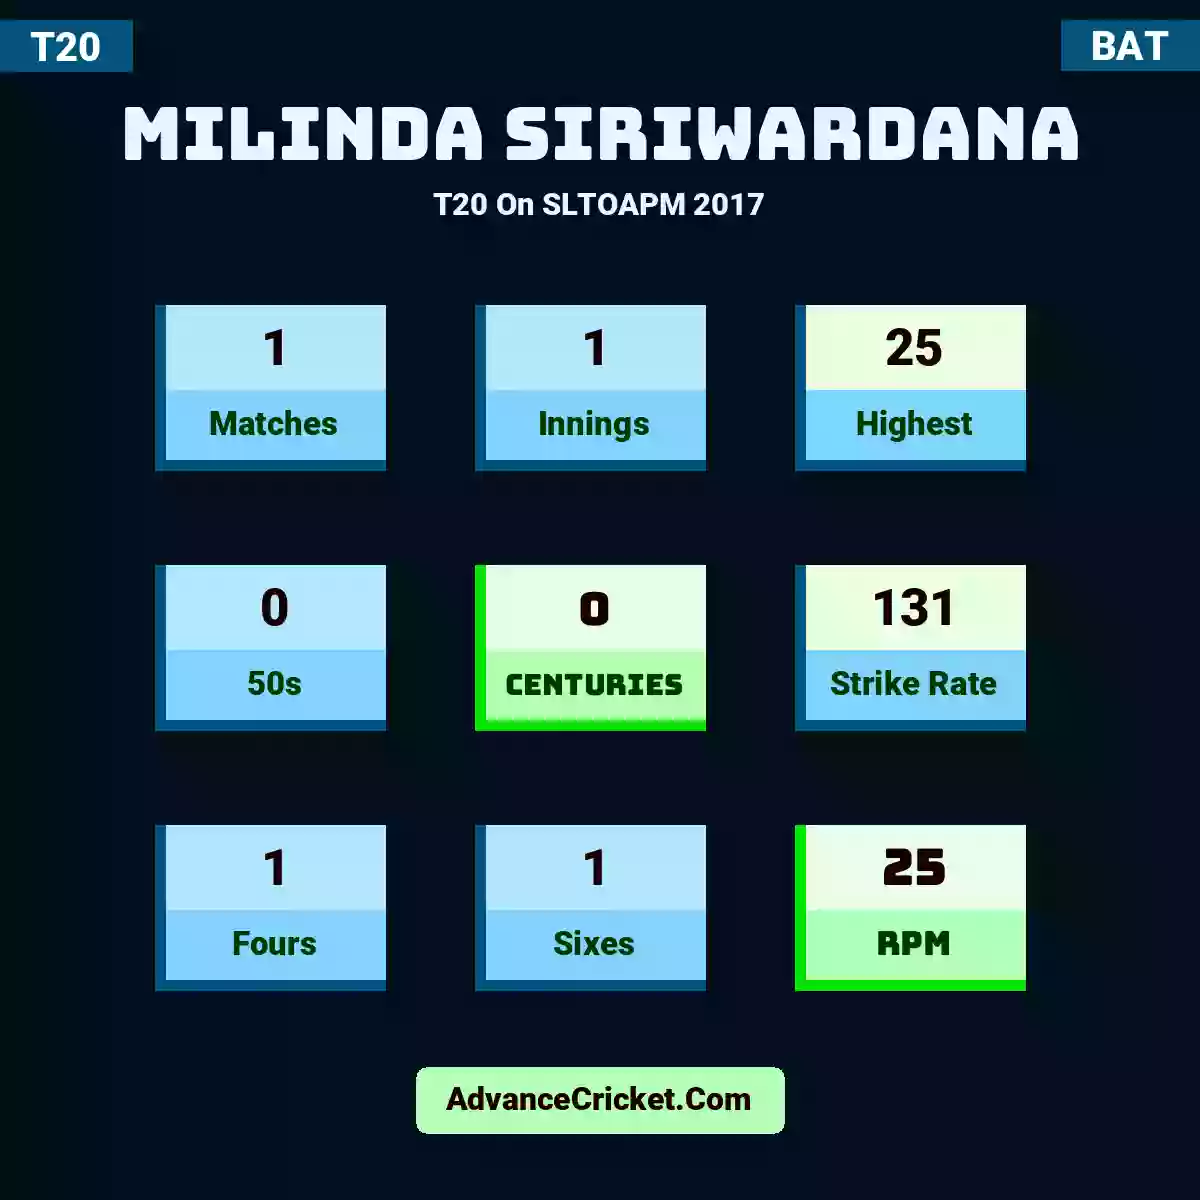 Milinda Siriwardana T20  On SLTOAPM 2017, Milinda Siriwardana played 1 matches, scored 25 runs as highest, 0 half-centuries, and 0 centuries, with a strike rate of 131. M.Siriwardana hit 1 fours and 1 sixes, with an RPM of 25.